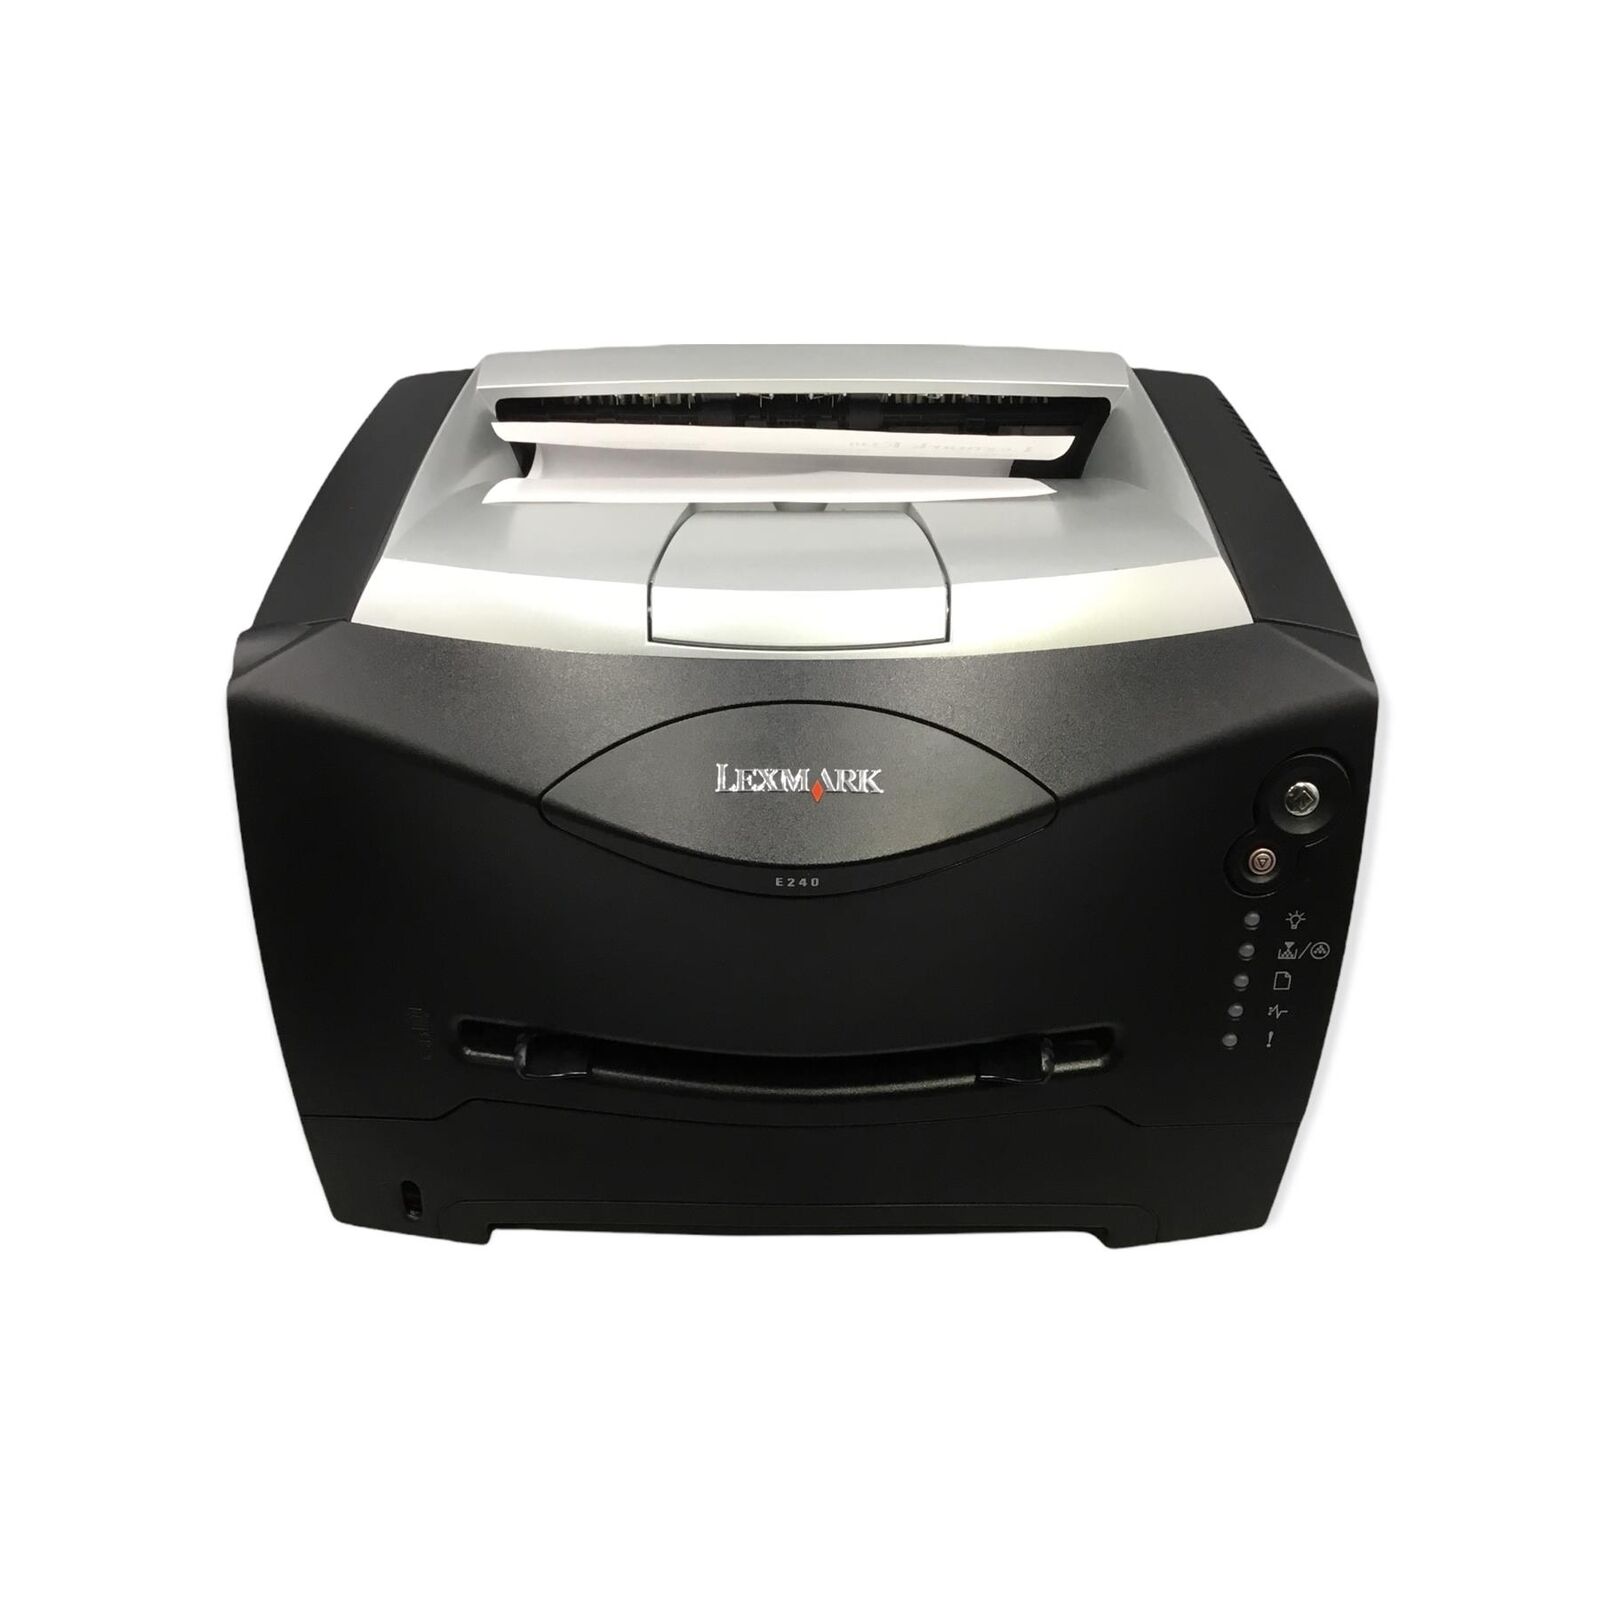 Lexmark E240 Monochrome Laser Printer Type 4511 